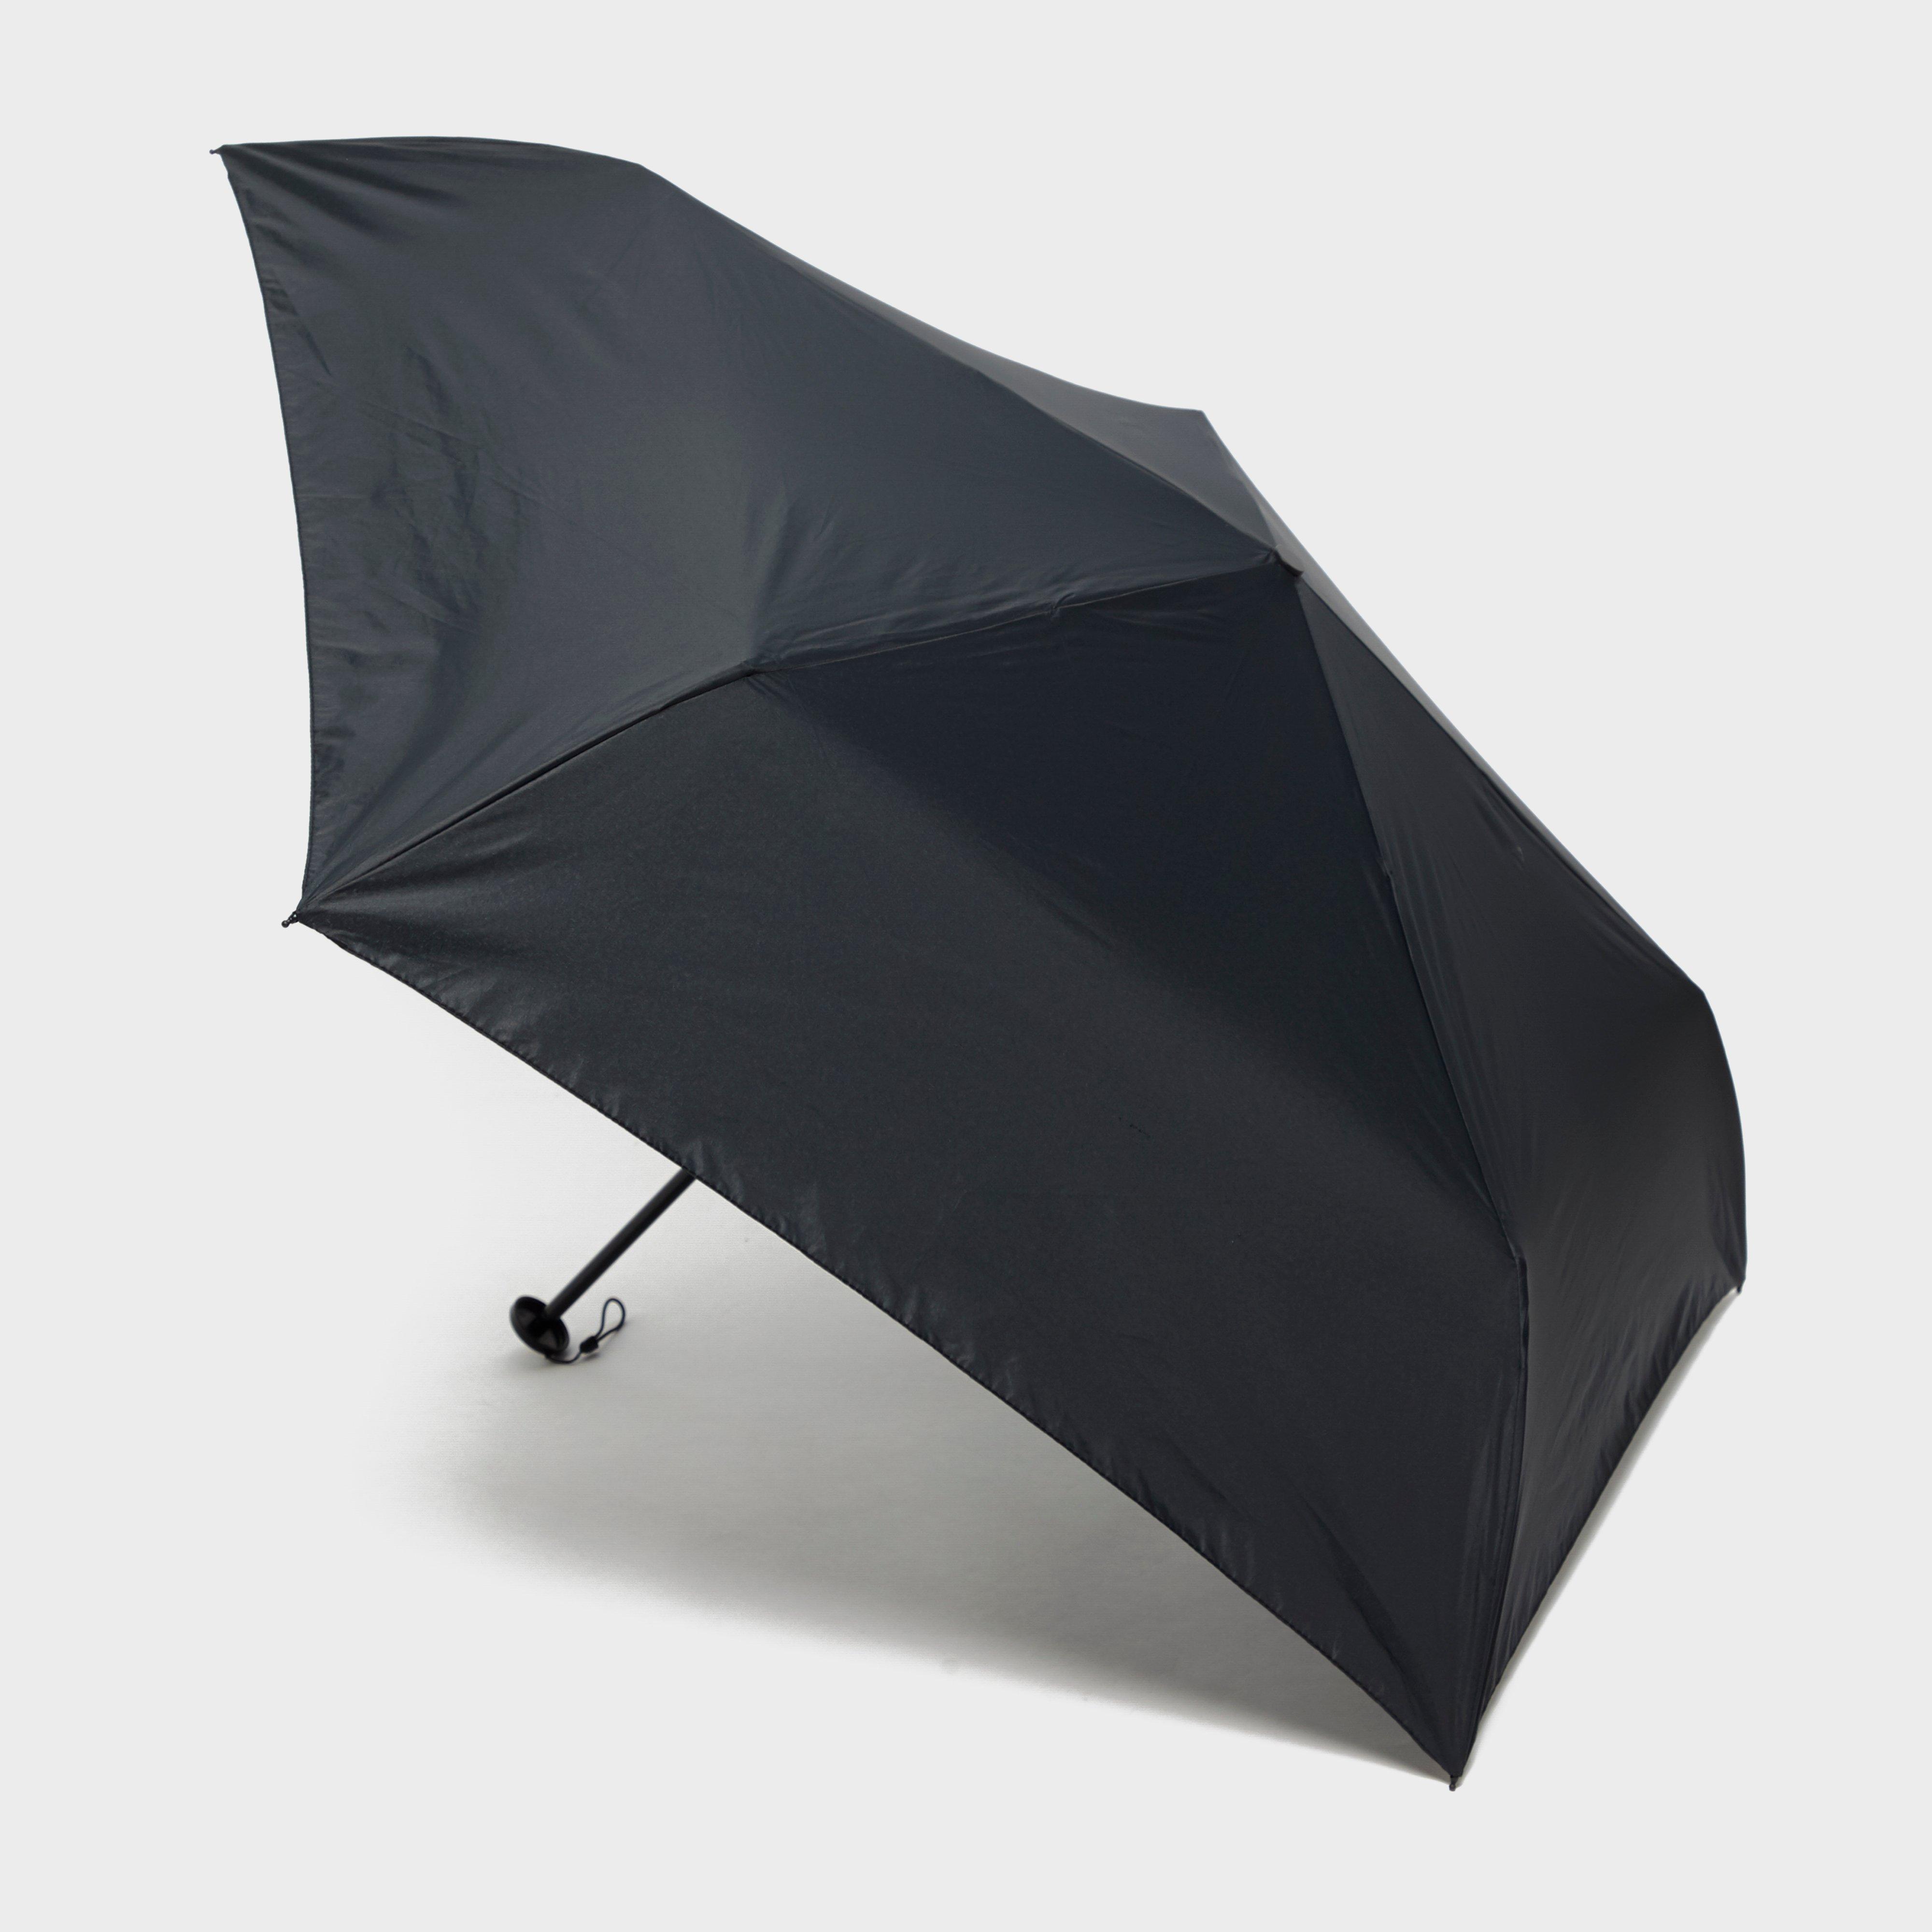 Aerolite Umbrella - Black, Black